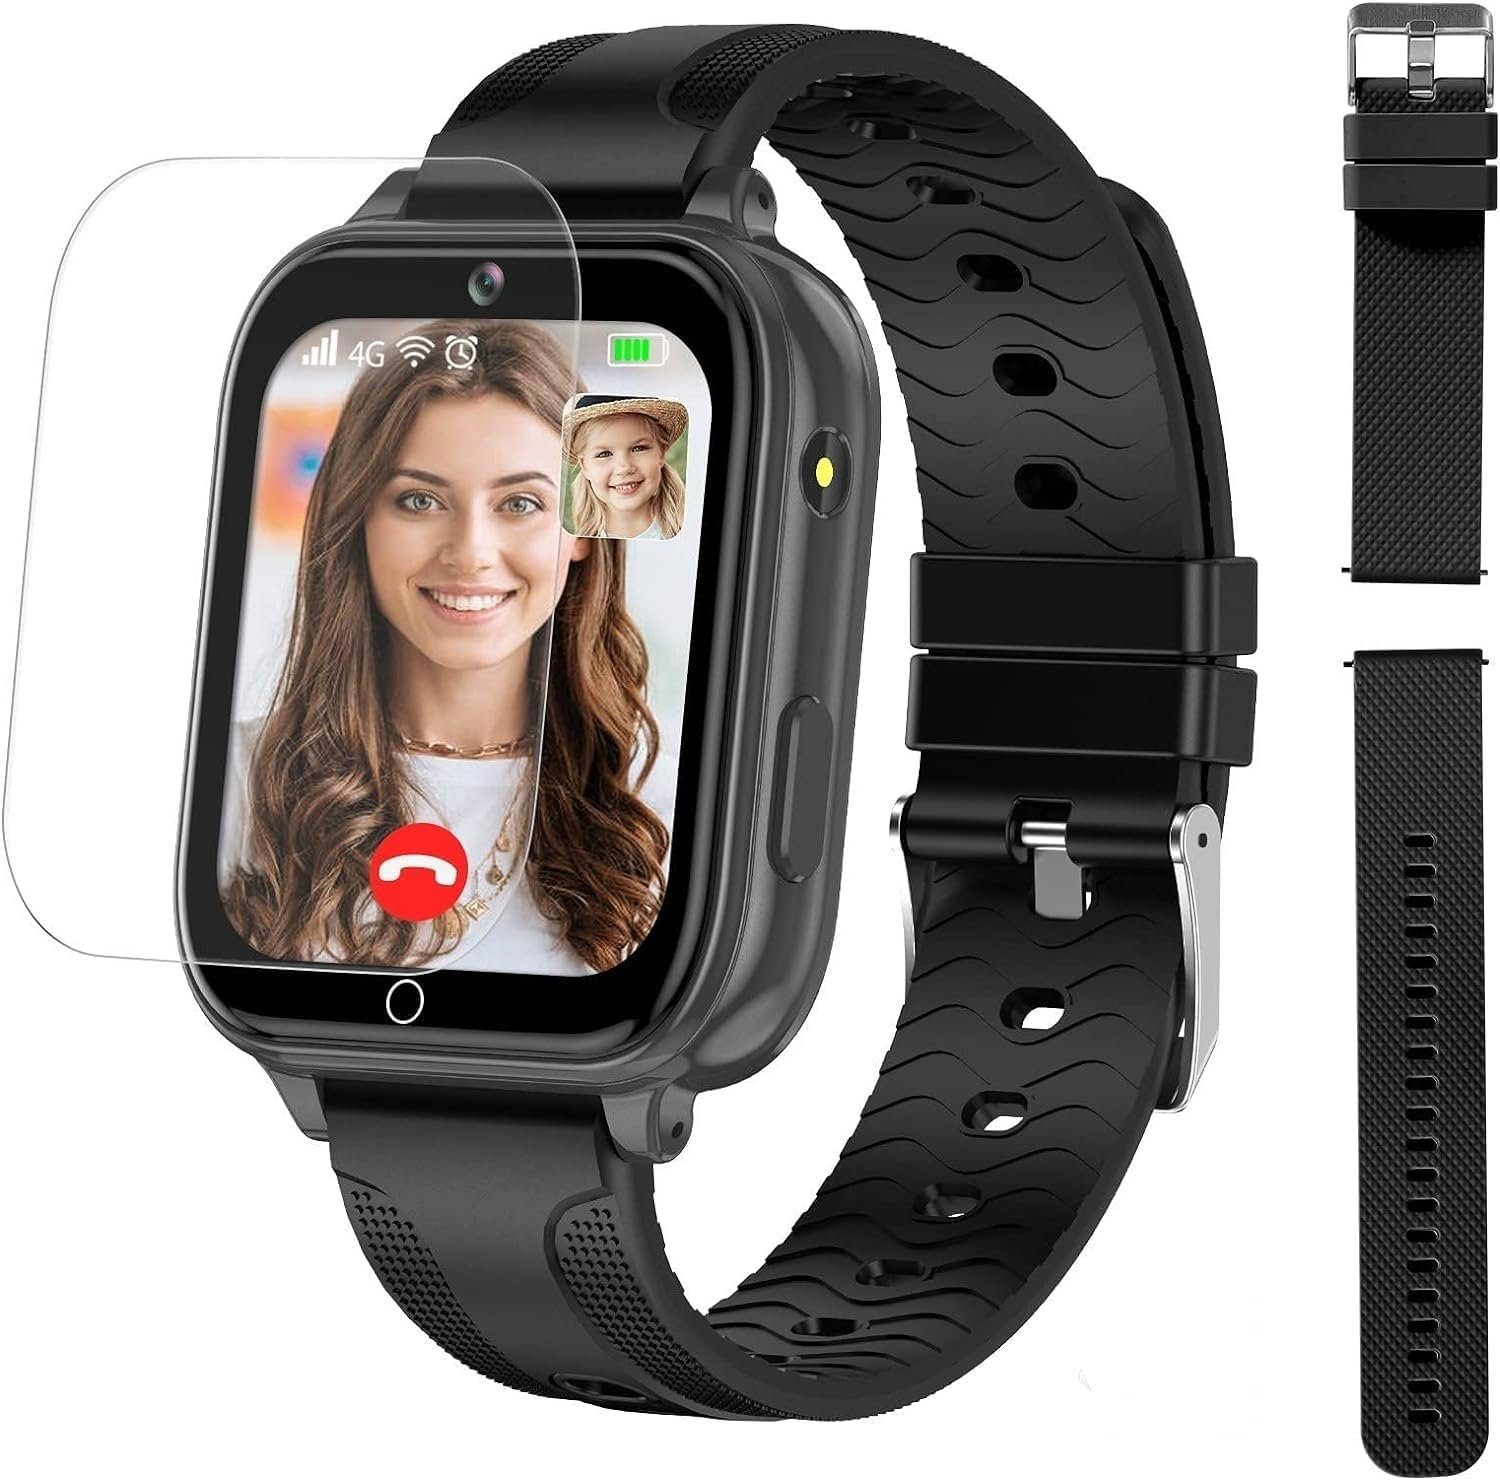 JOVELL für Jungen Mädchen Telefon touchscreen Smartwatch (1.69 Zoll), Mit  4G GPS Videoanruf Kamera Musik Player Gesichtserkennung Geofence